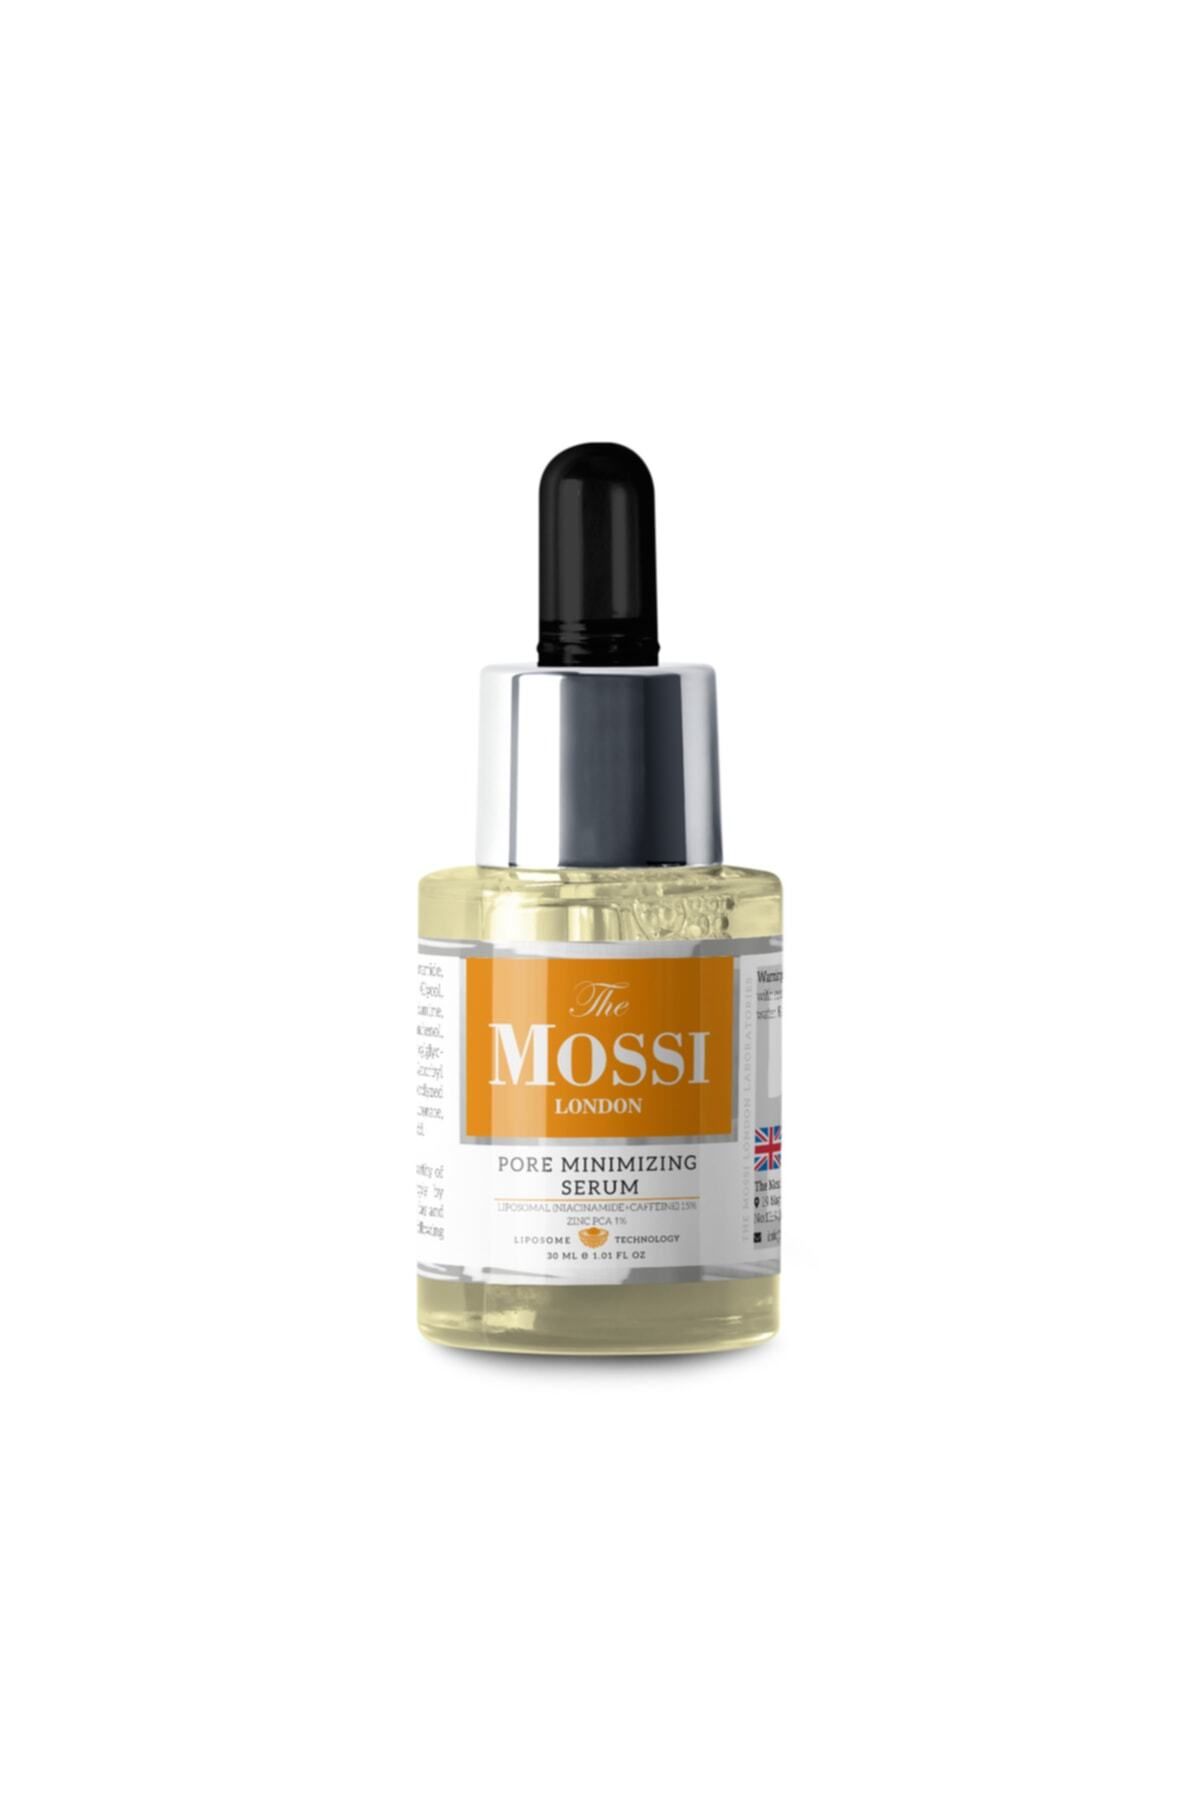 The Mossi London Pore Minimizing Serum Liposomal (NİACİNAMİDE CAFFEİNE) 15% Zinc Pca 1% 30 ml - Tml1014